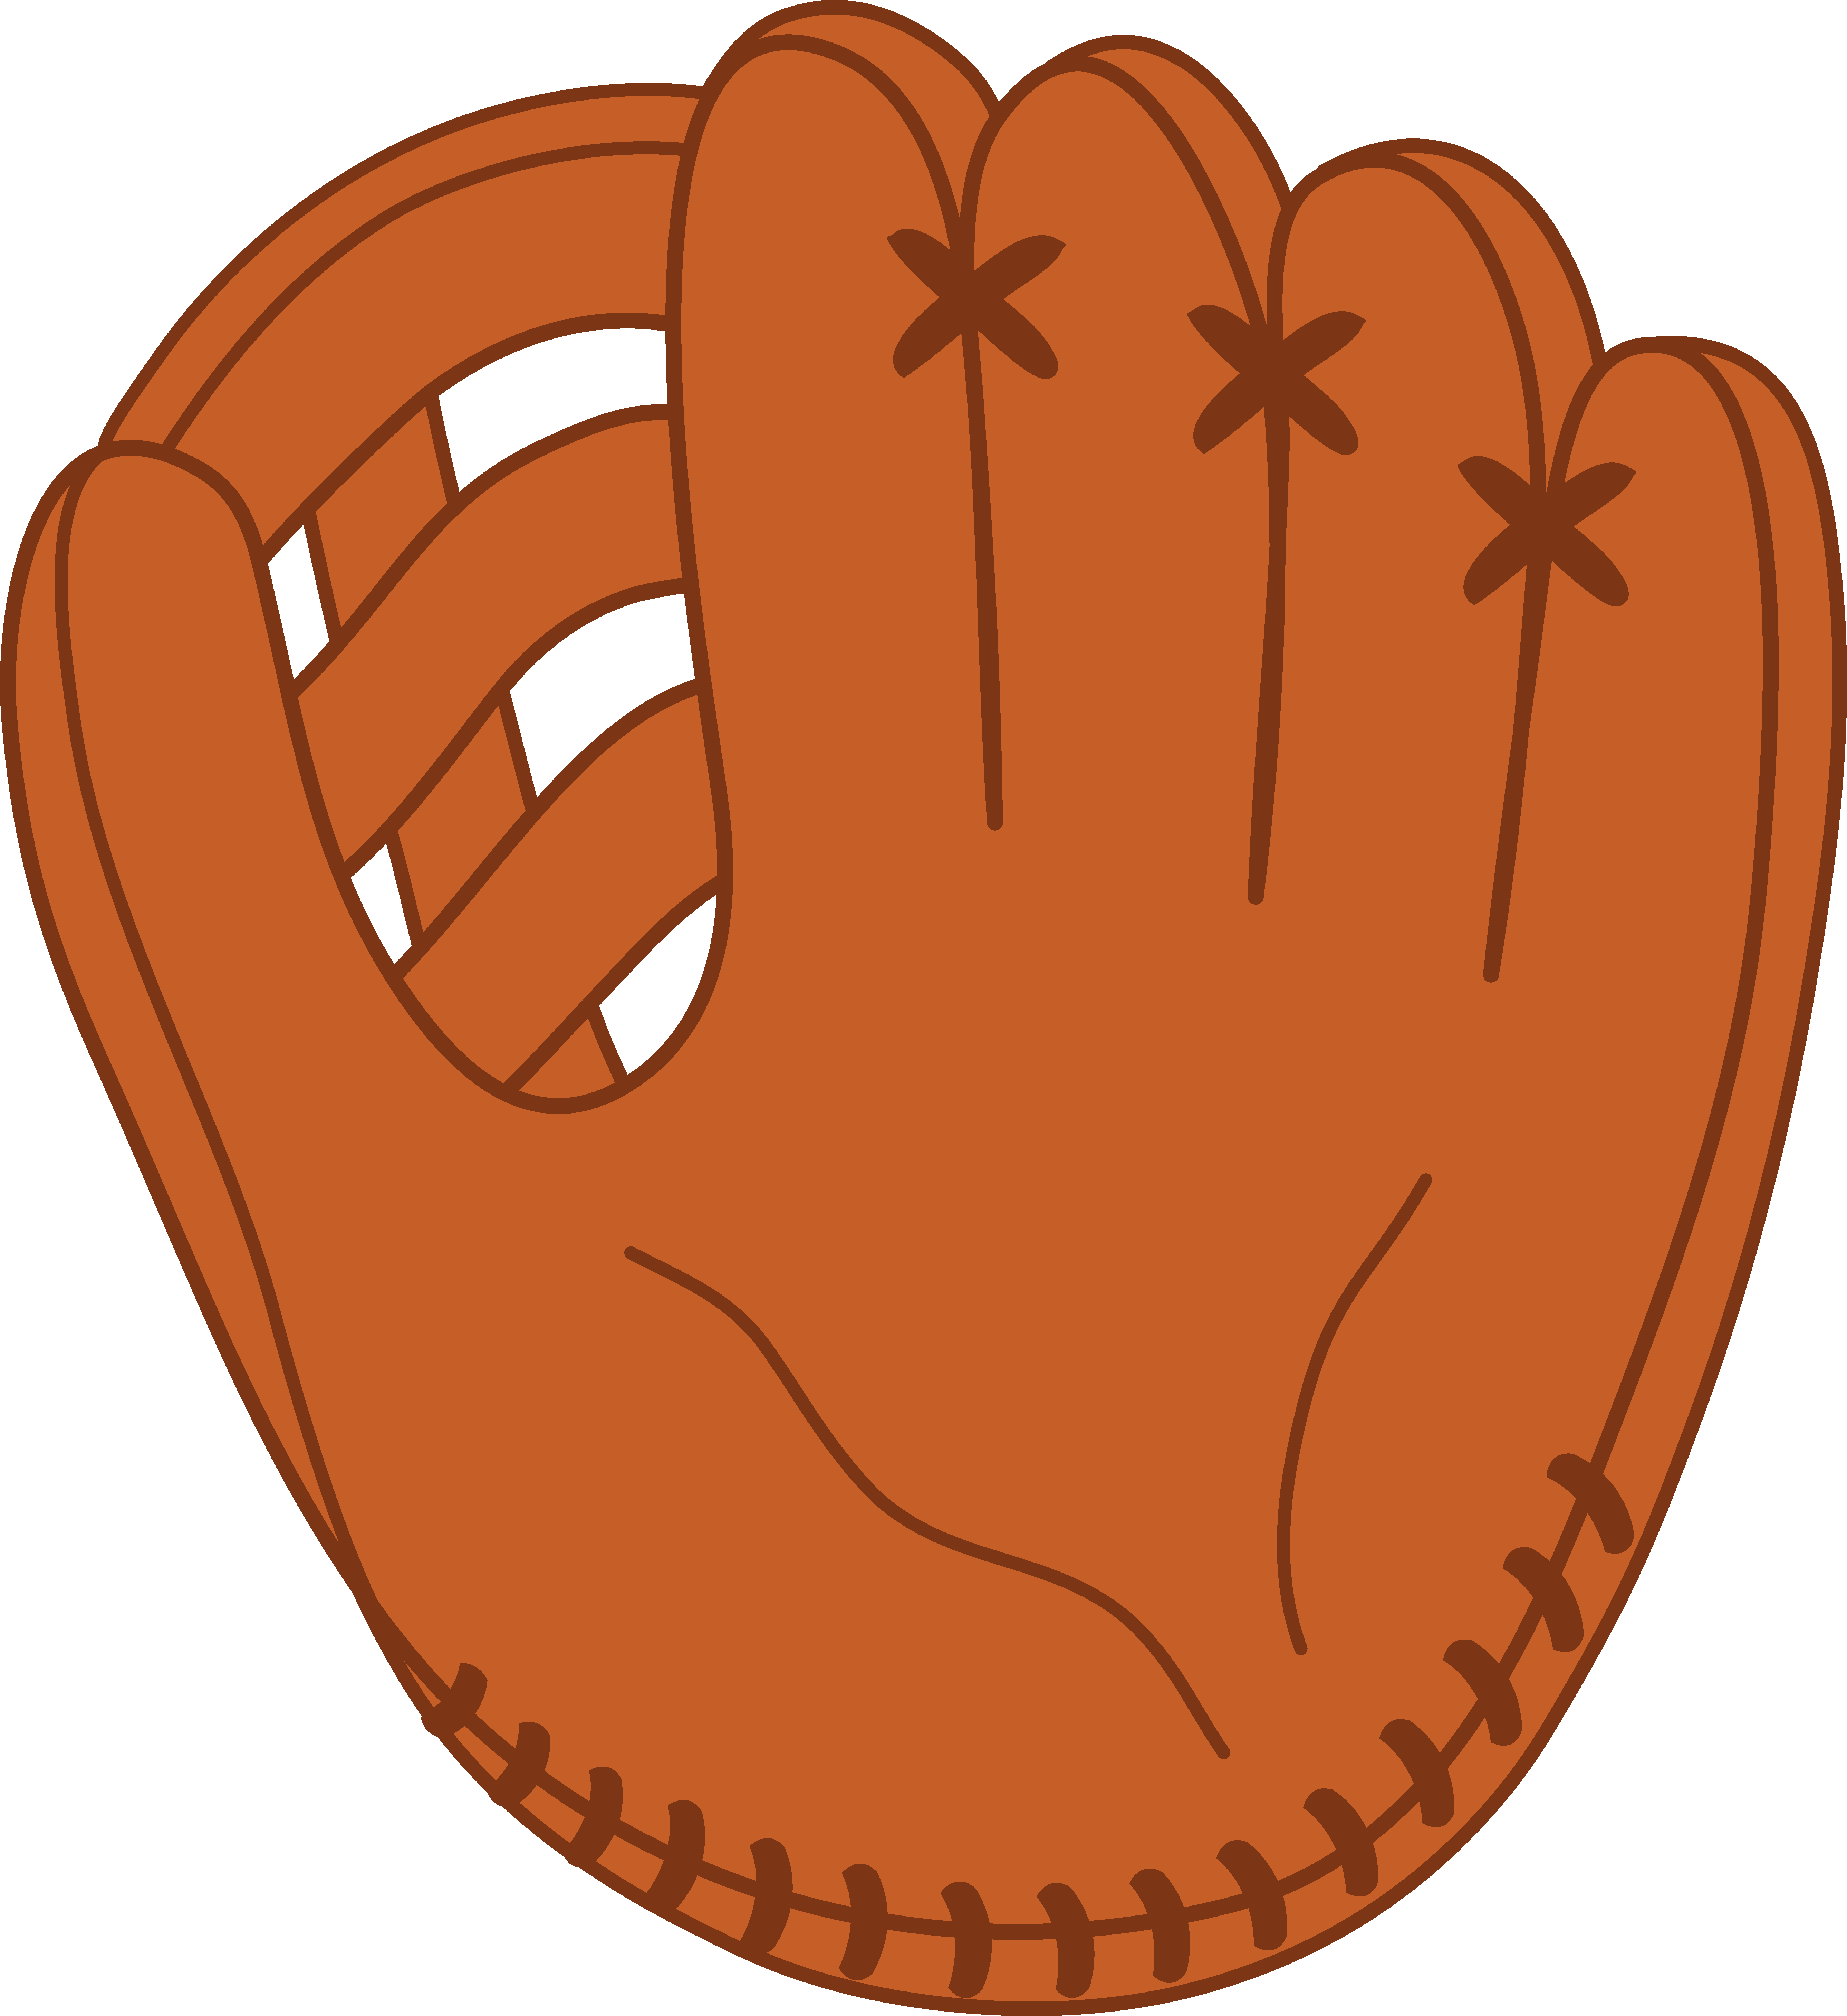 Mittens clipart hand glove. Leather baseball mitt free